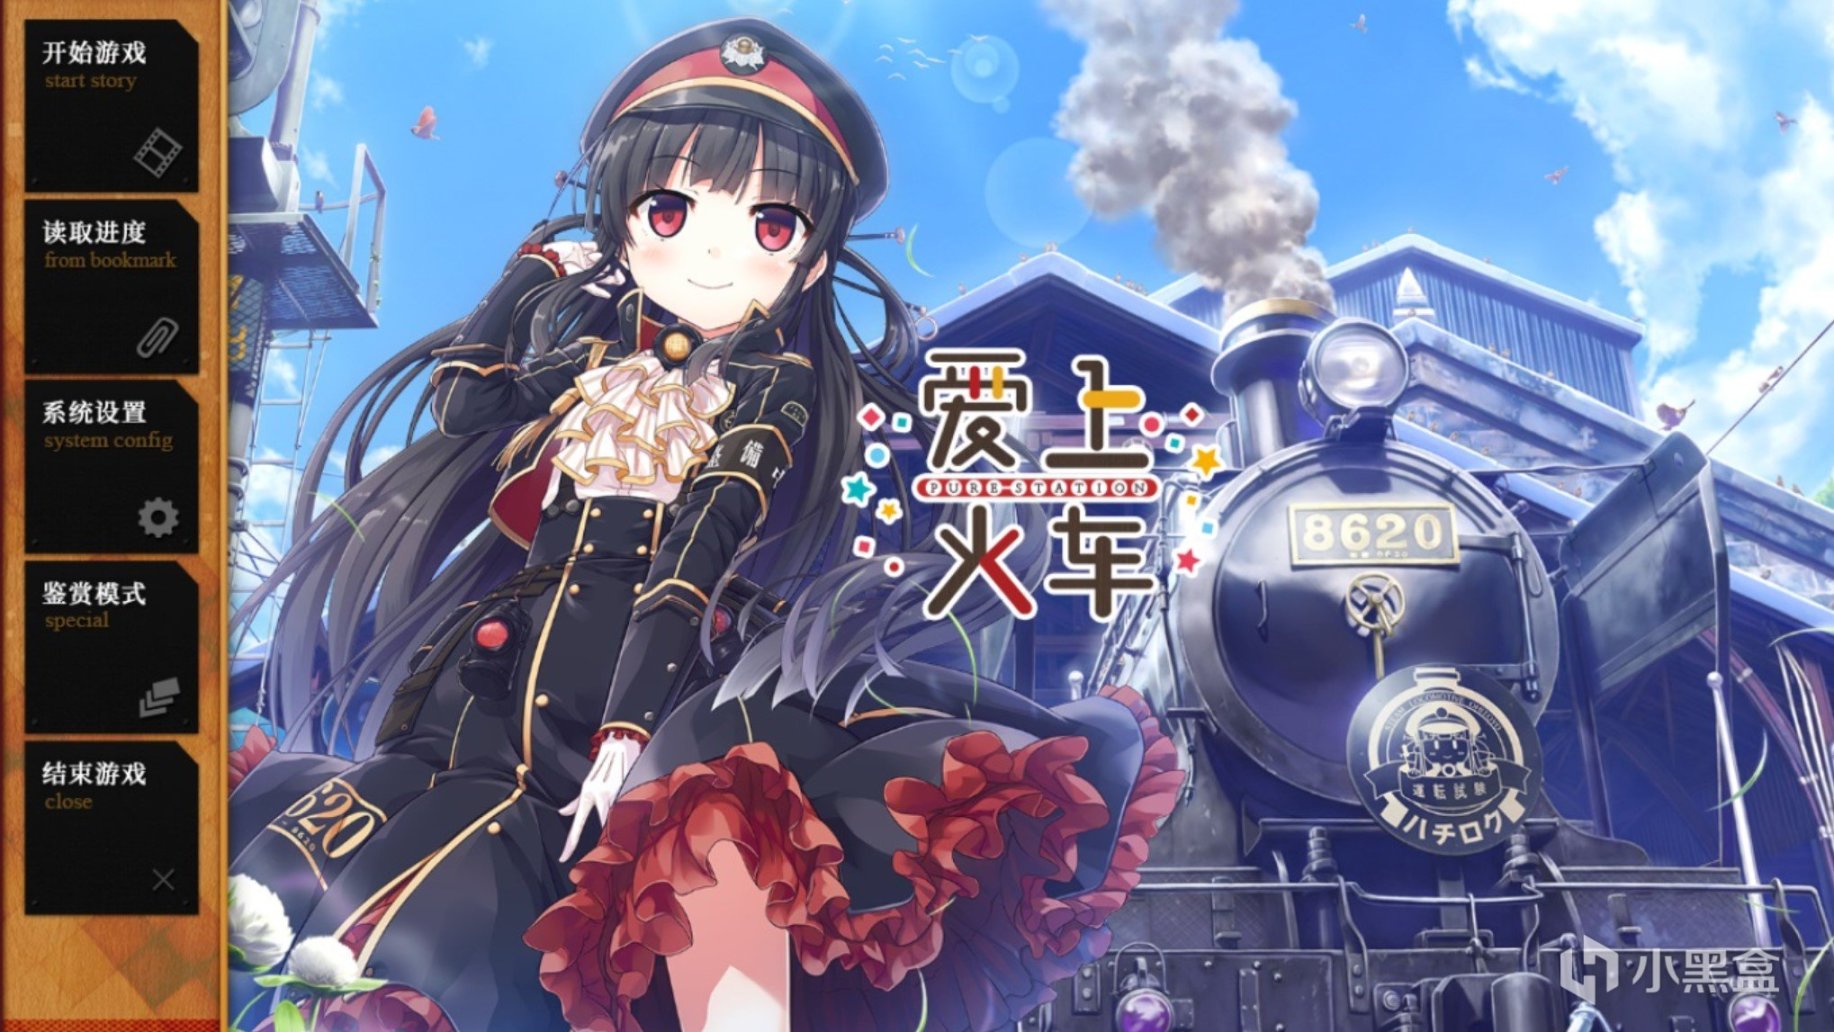 【steam每日特惠】爱上火车系列、爱丽娅的明日盛典等新平史低 2%title%